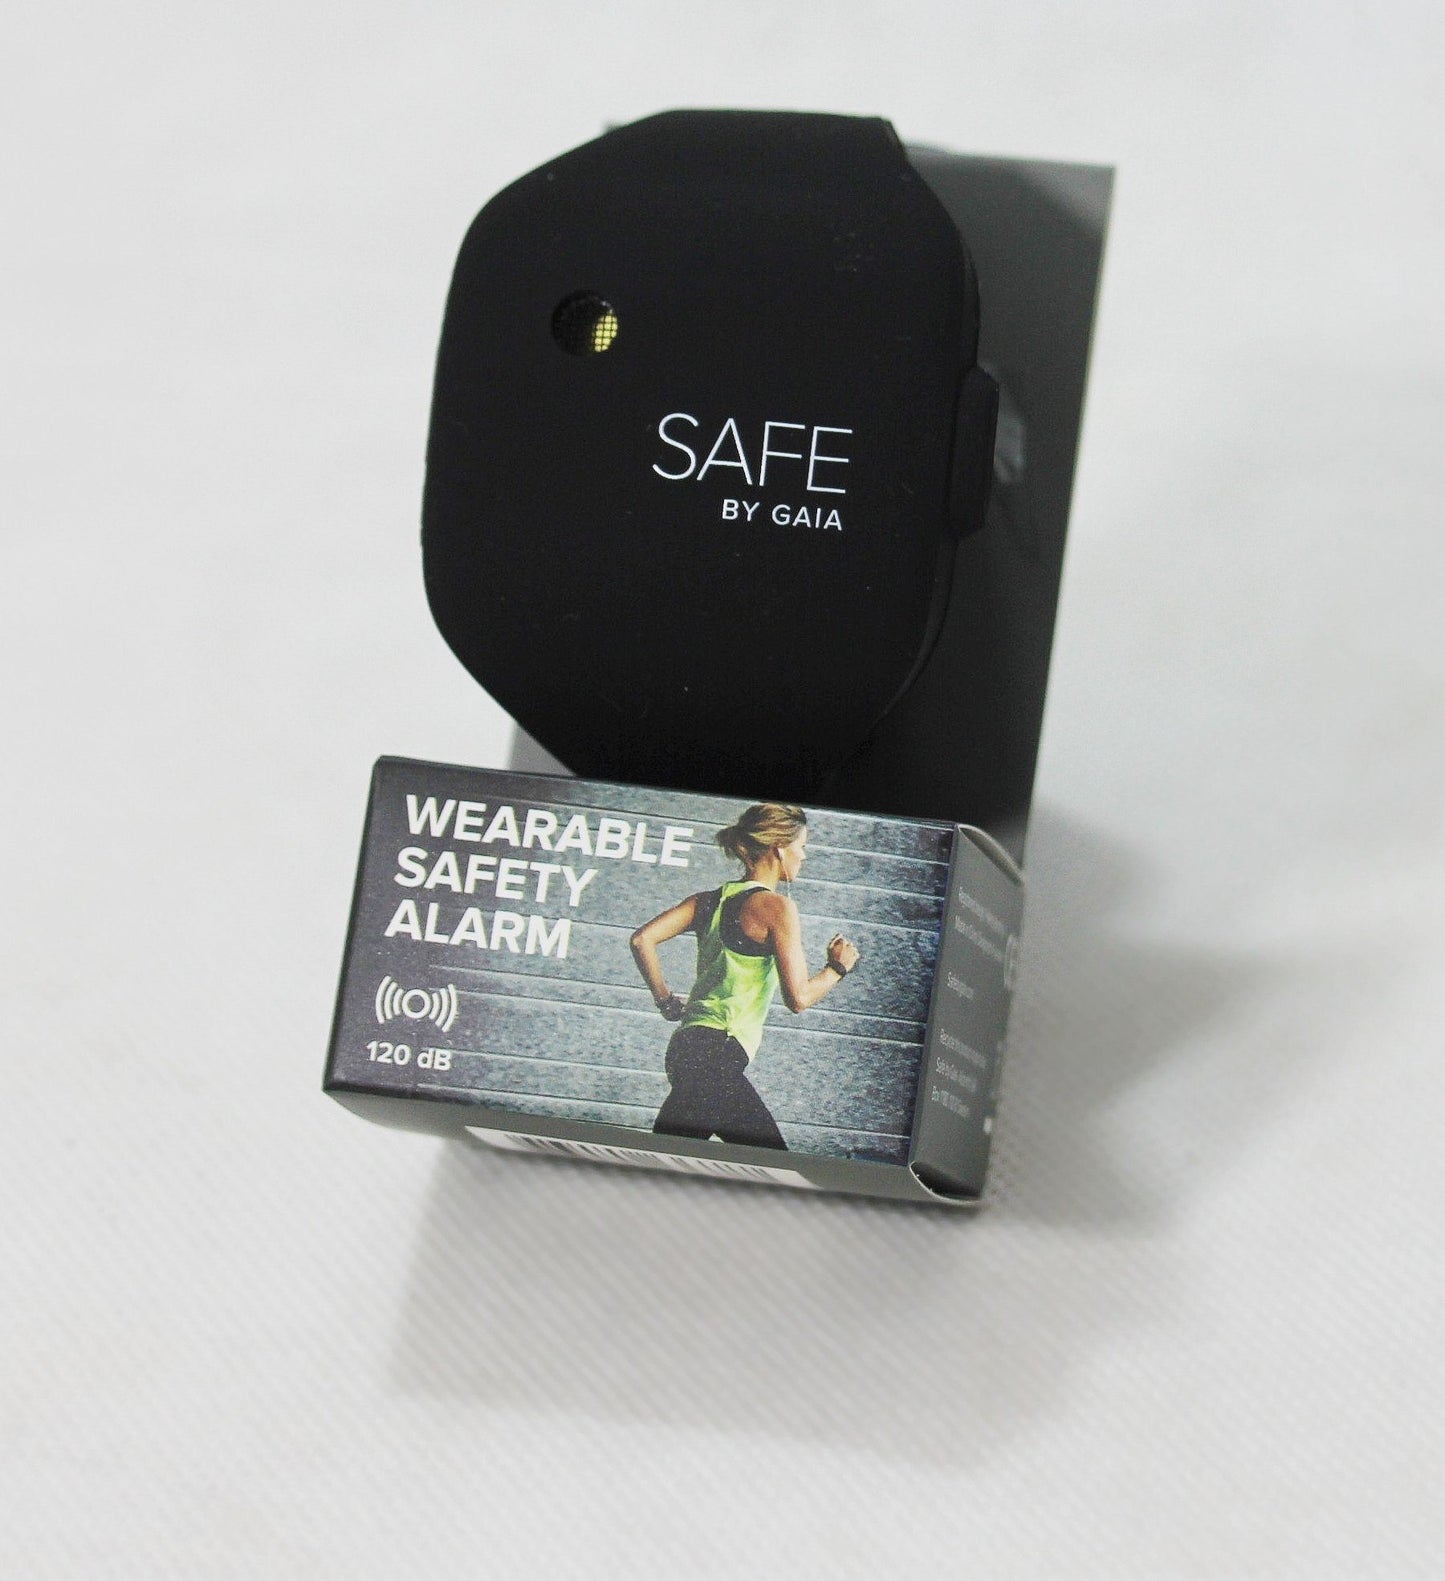 Alarm-Armband "SAFE by GAIA", Wearable, Sportuhr-Design, Sicherheit, 120dB Poweralarm